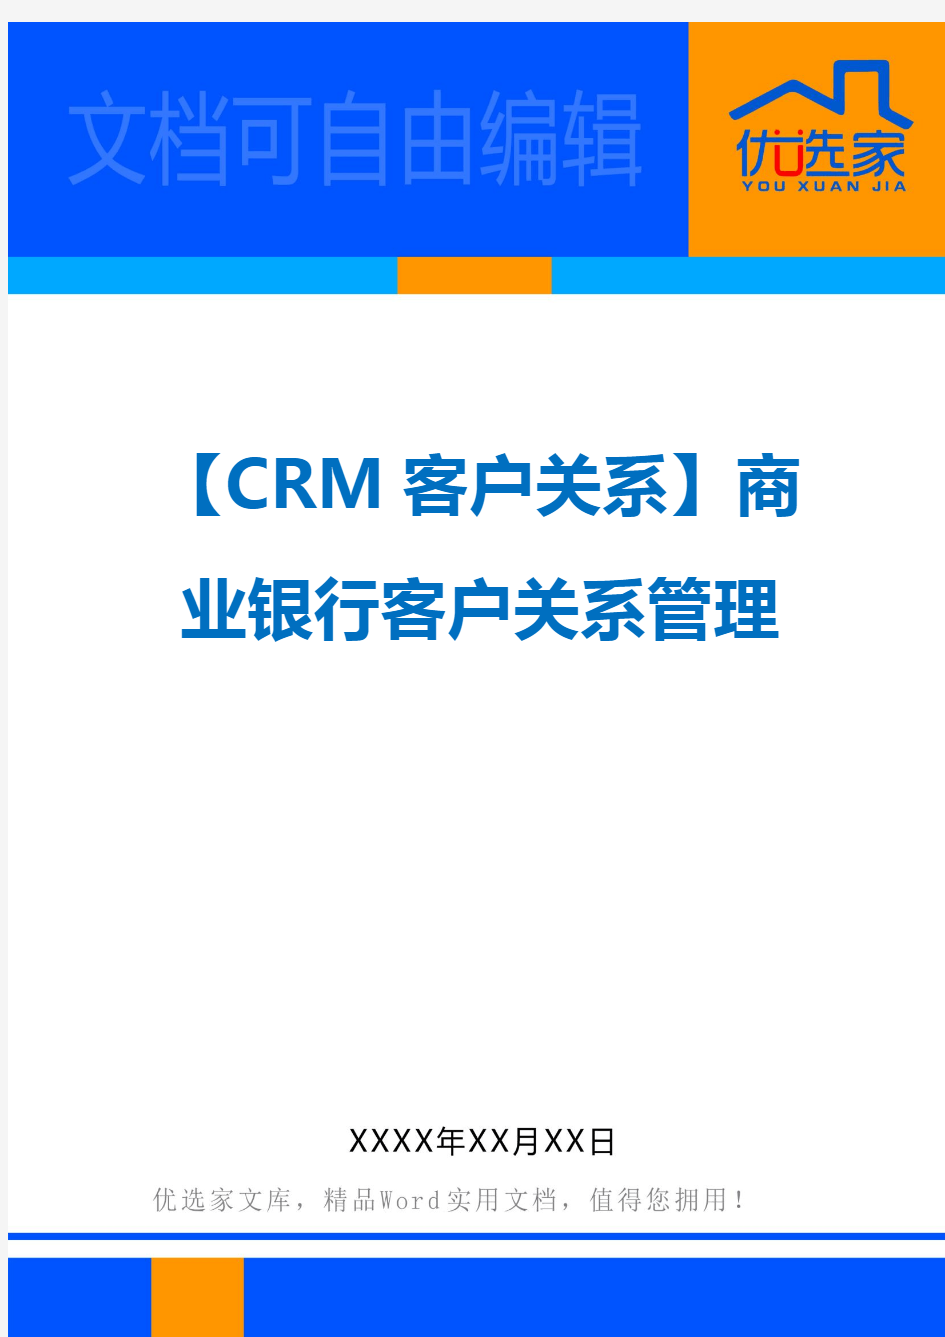 【CRM客户关系】商业银行客户关系管理